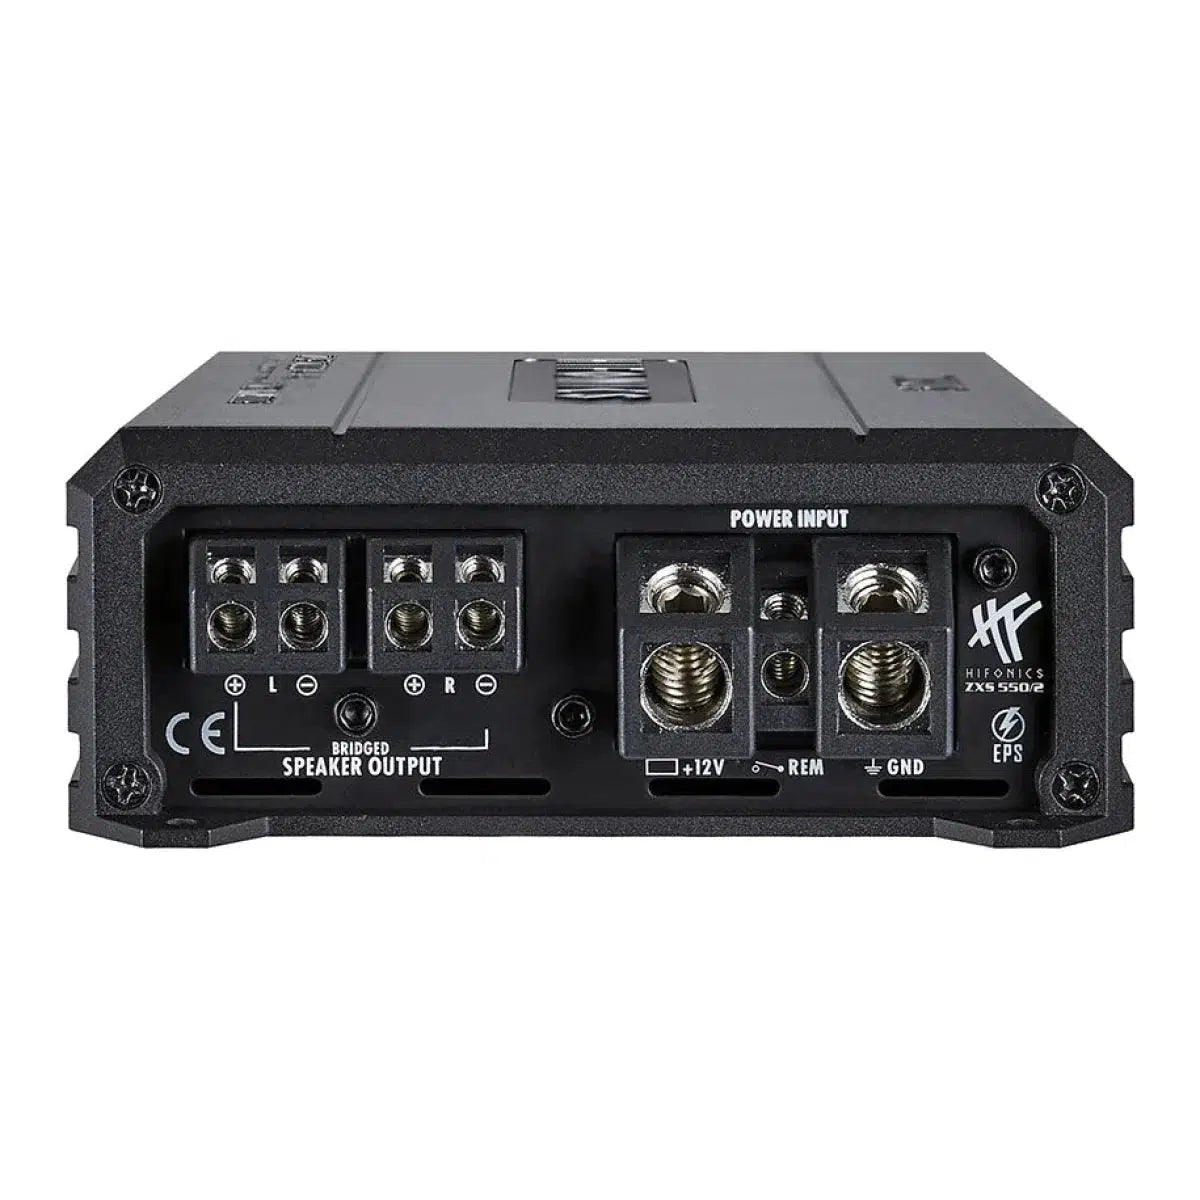 Amplificador Hifonics-Zeus Street ZXS550/2-2 canales-Masori.de